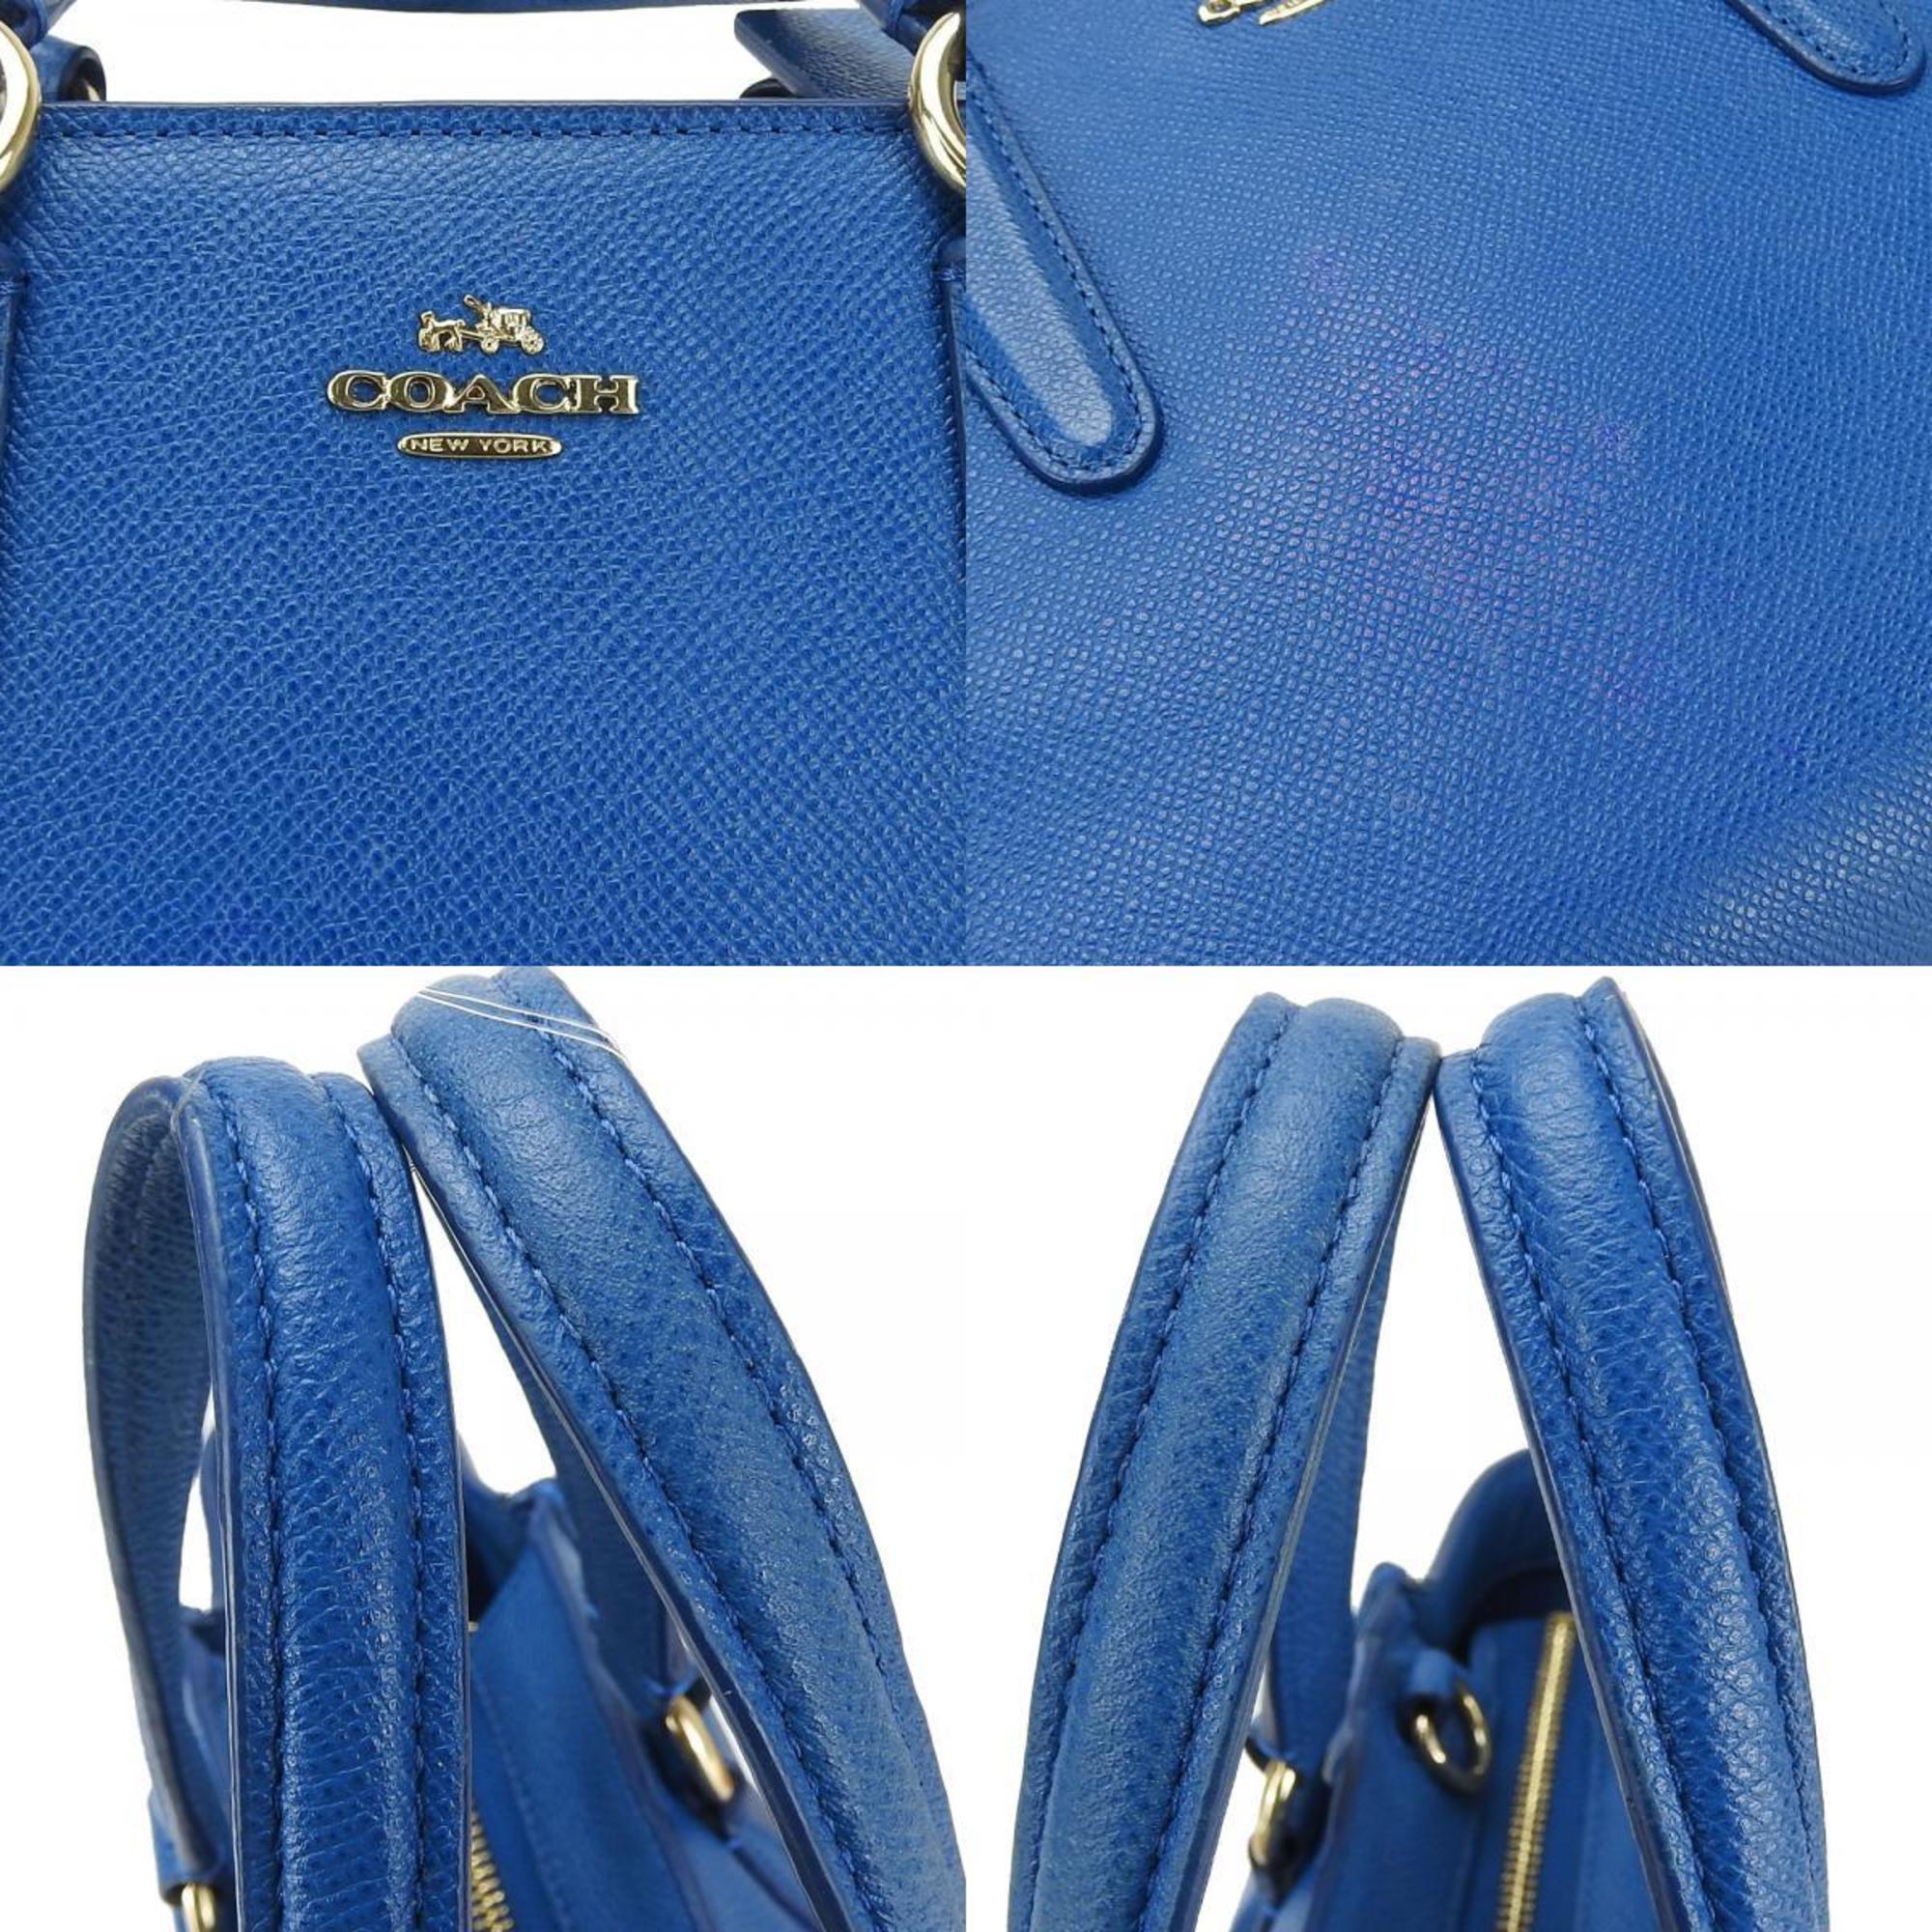 Coach handbag Crosby Carryall 33996 leather blue shoulder bag for women COACH